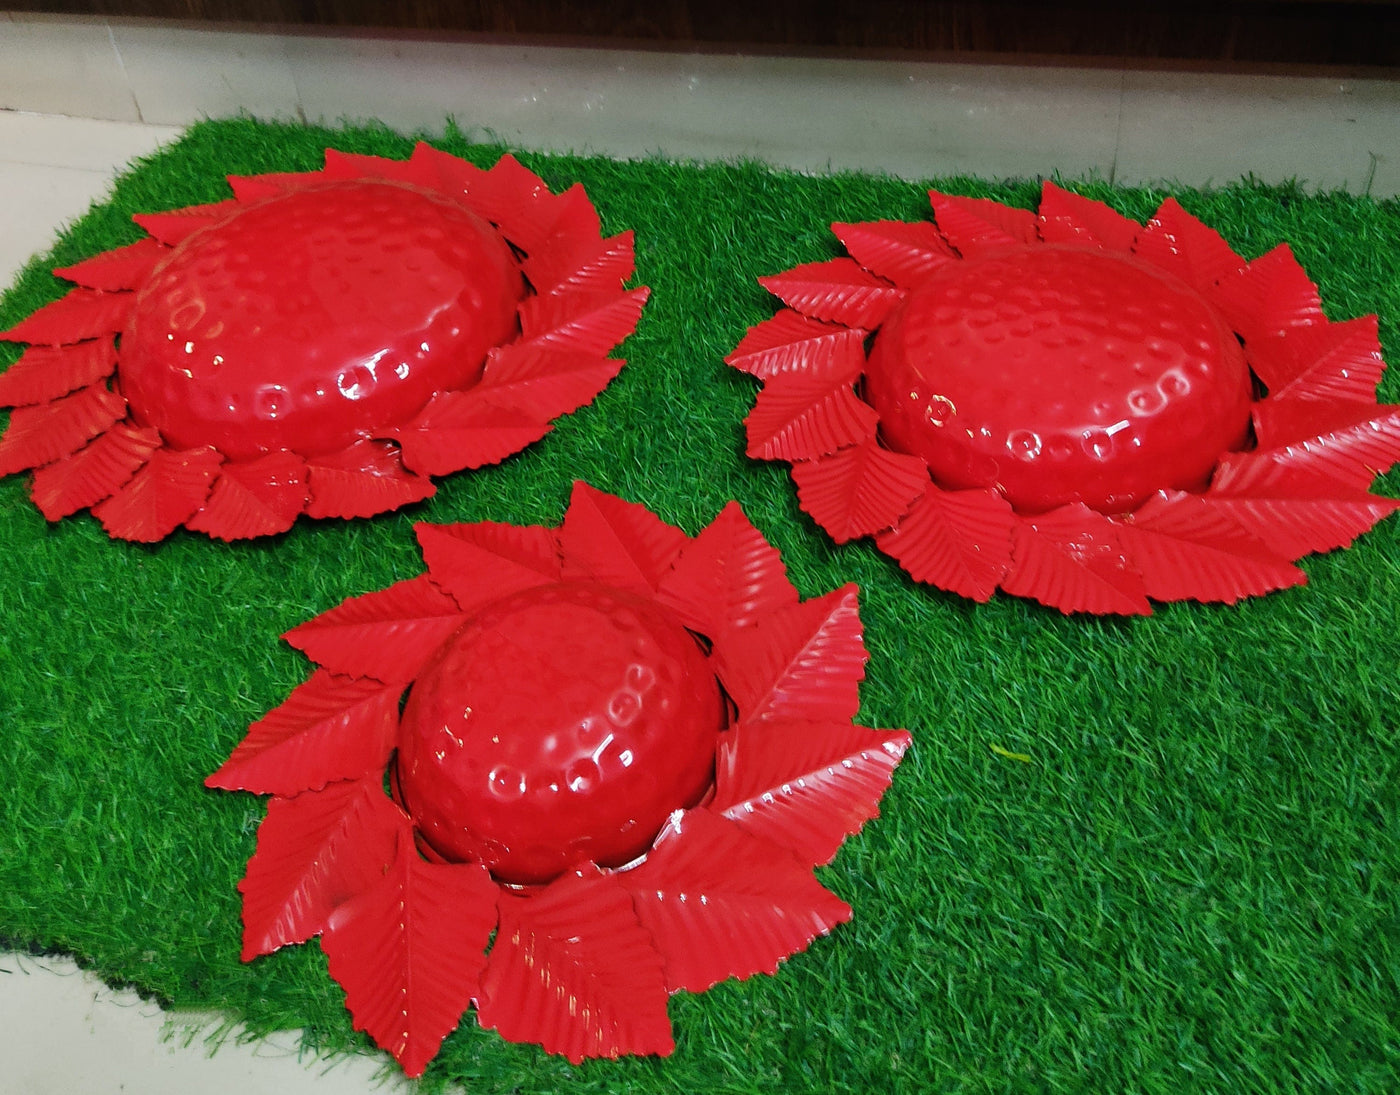 Lamansh urli LAMANSH® Red Floral Leaf Shape Metal URLI Decorative Handcrafted Bowl for Floating Flowers and Tea Light Candles Home,Office and Table Decor / Urli for ✨Festival Diwali & Ganpati decoration